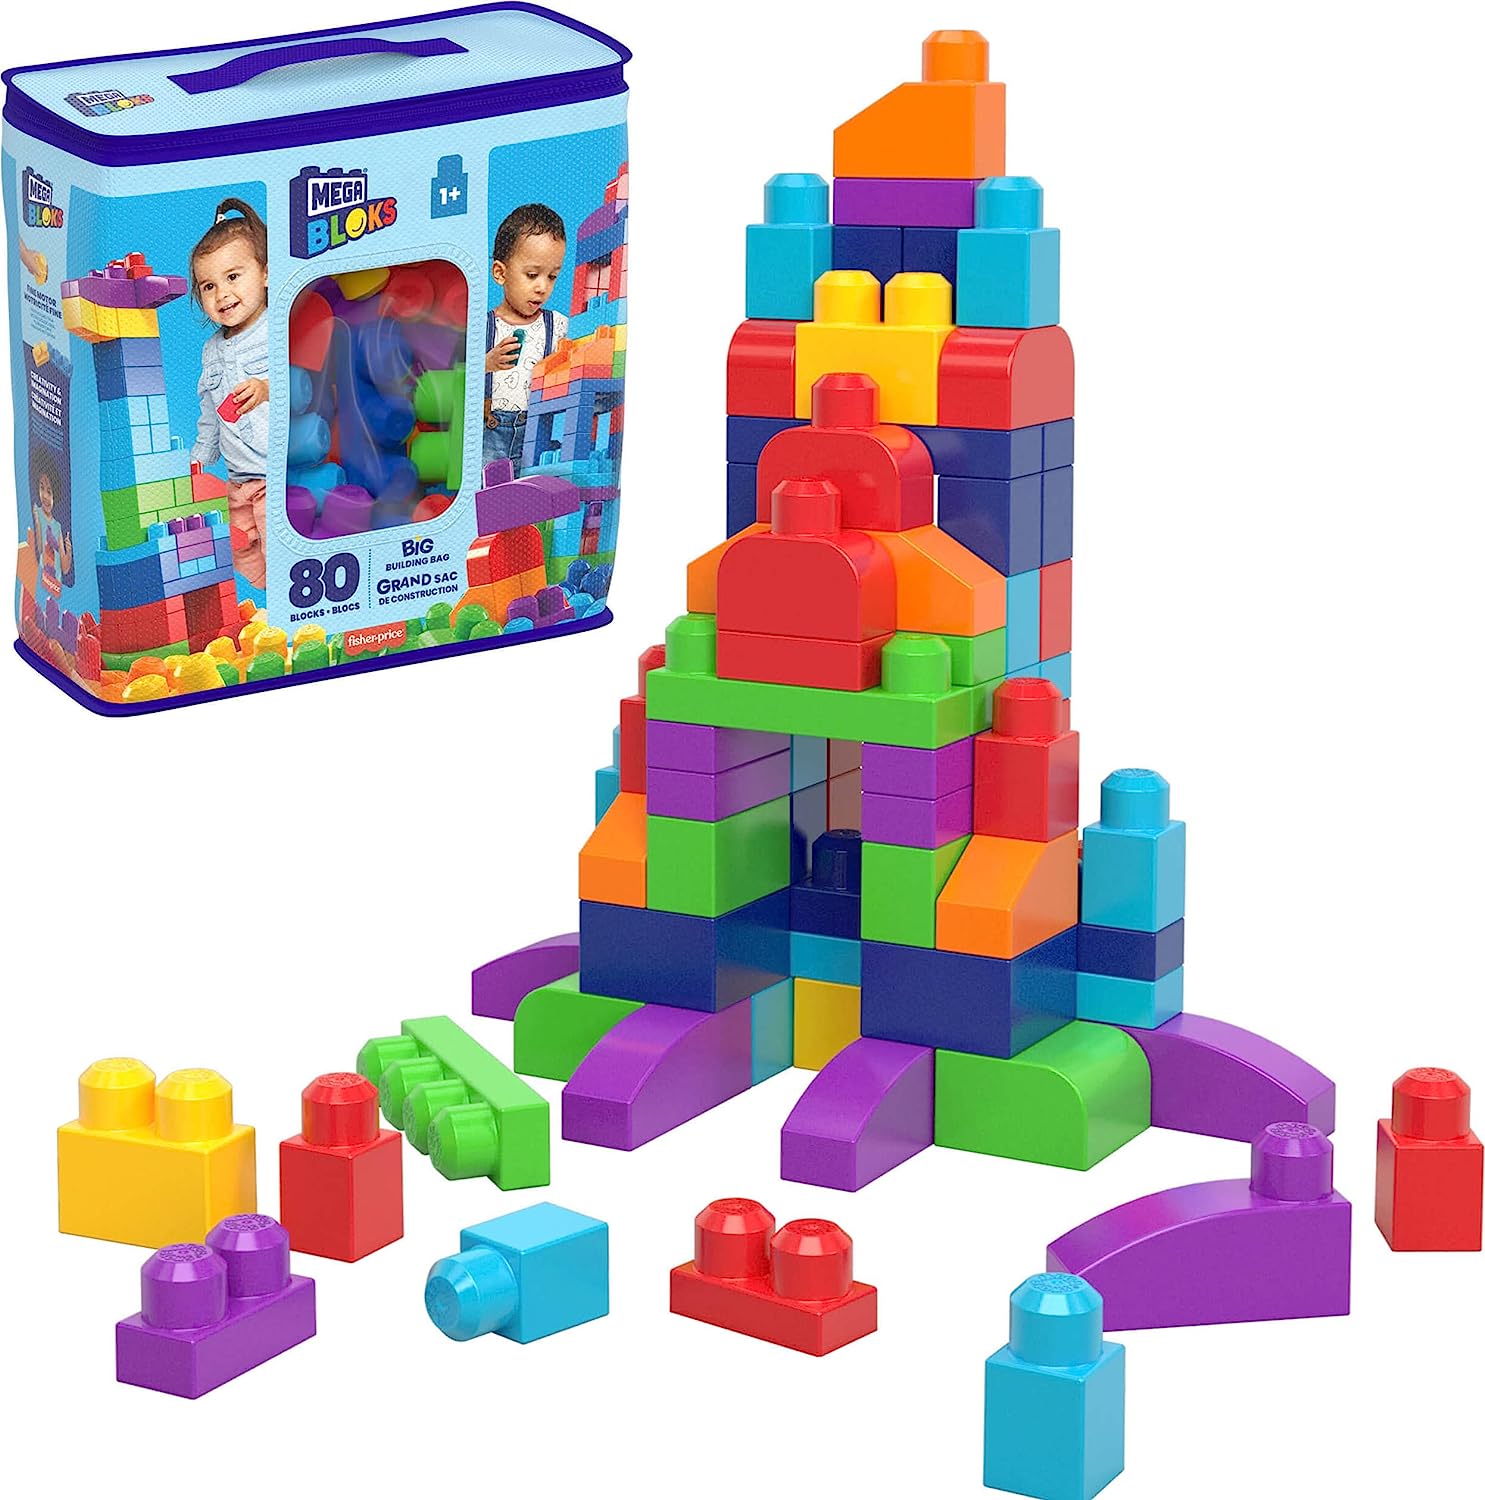 mega blocks building set for kids, best toys for 2-year-olds